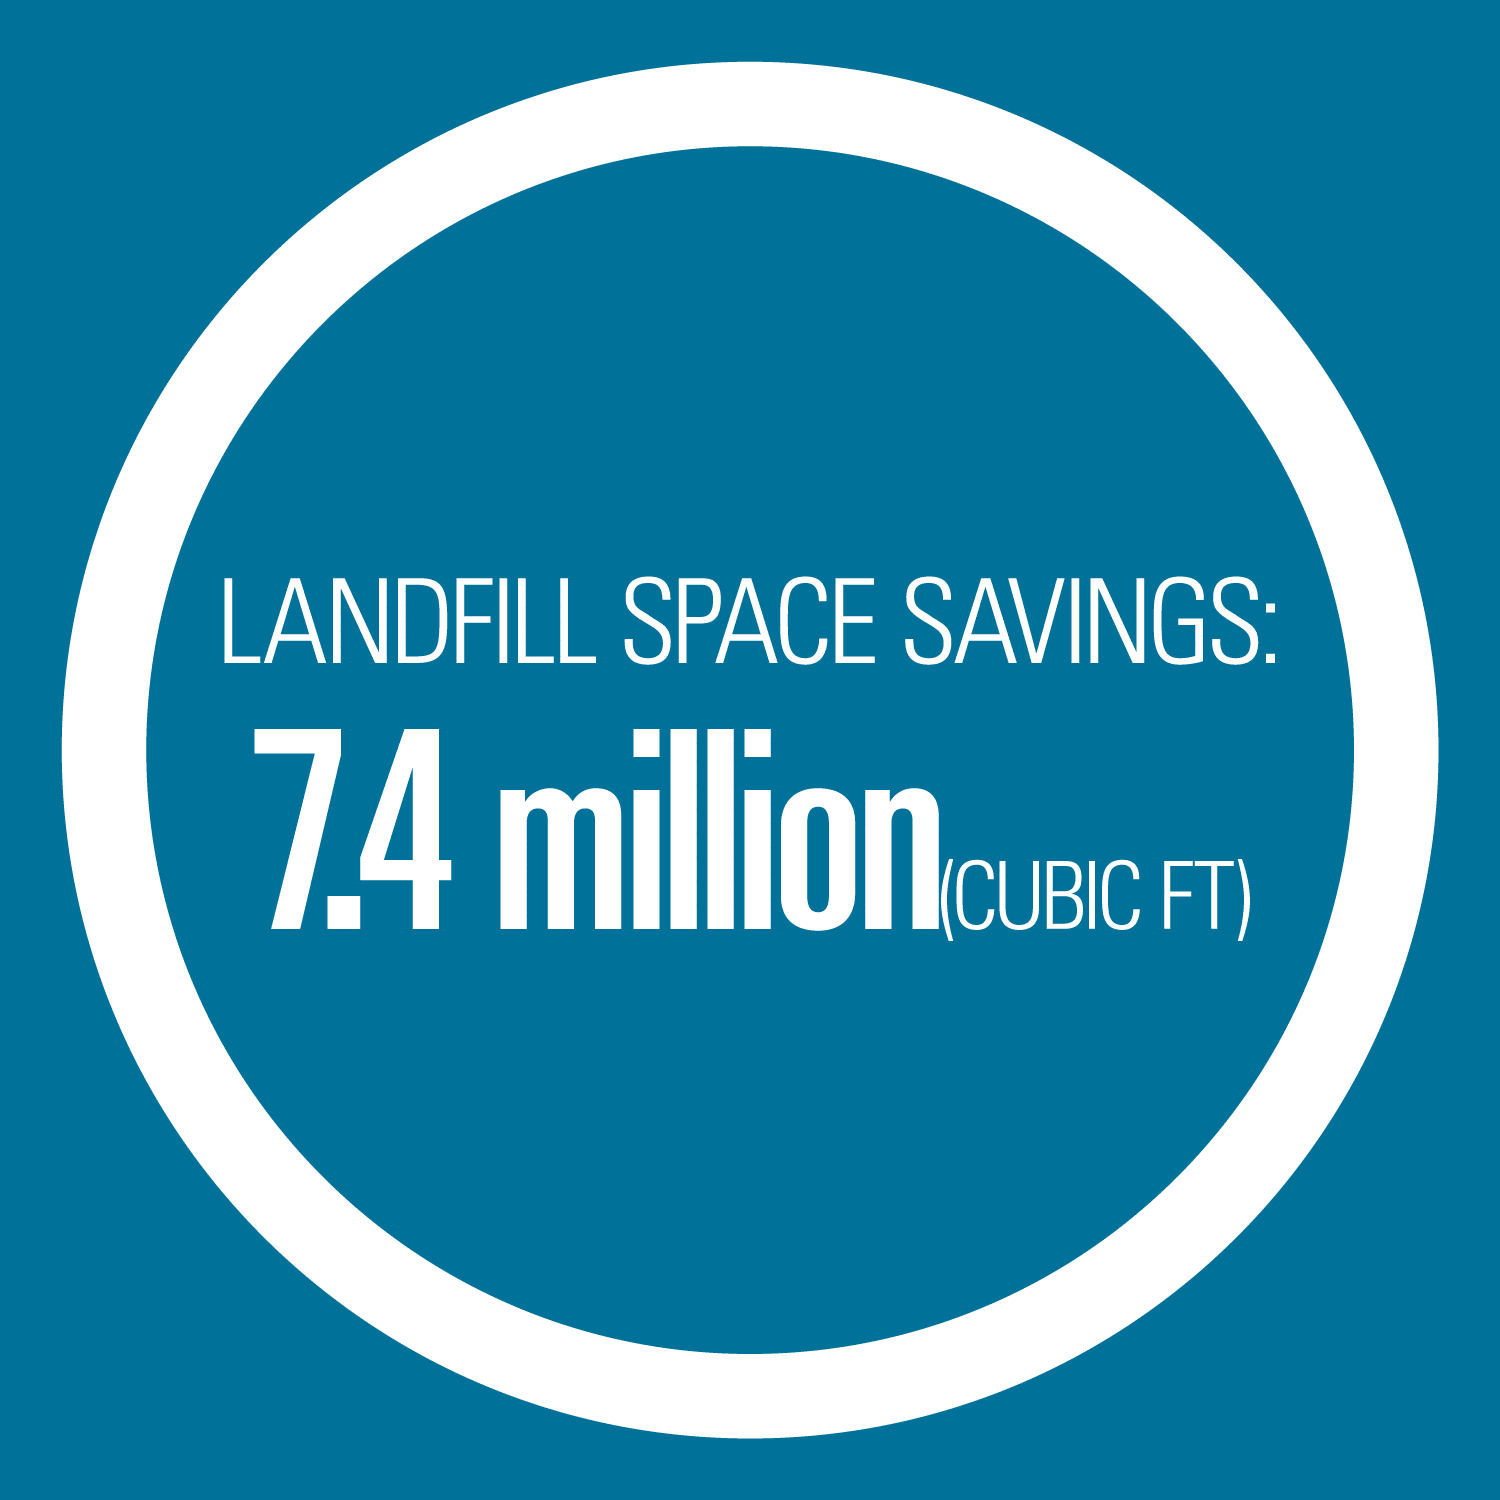 Landfill space savings - 7.4 million cubic feet